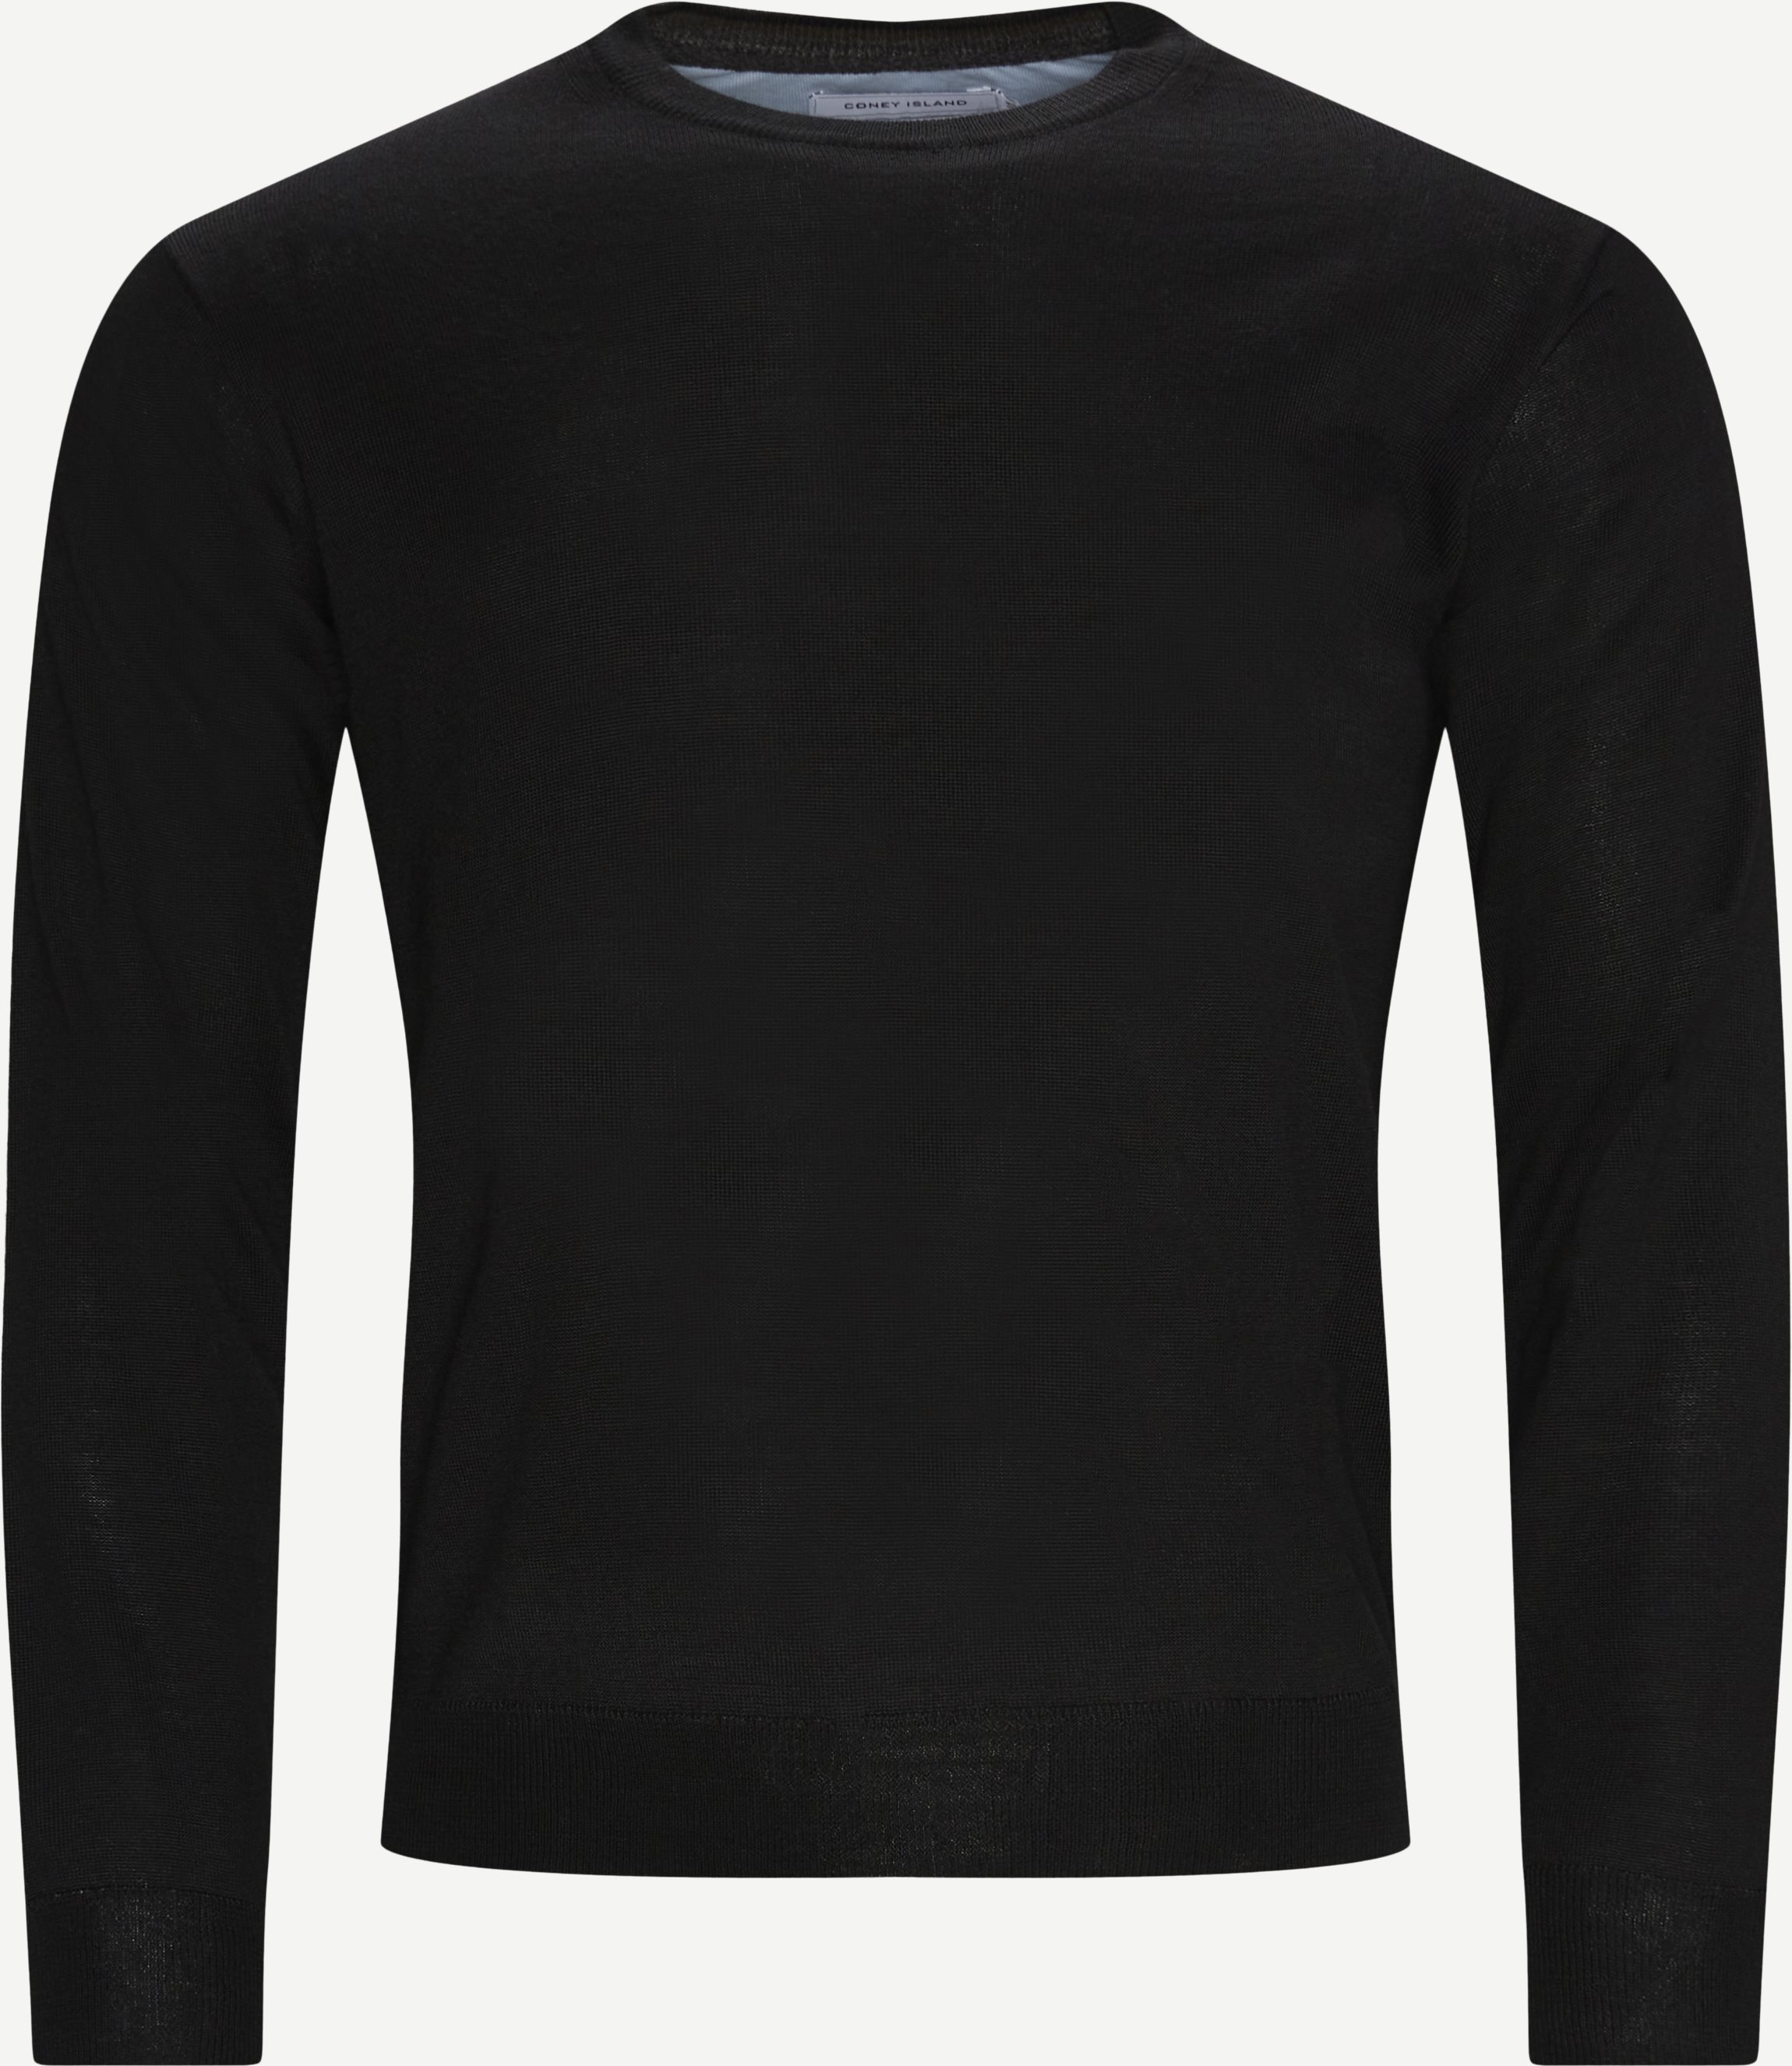 Lipan Merino knitted sweater - Knitwear - Regular fit - Black